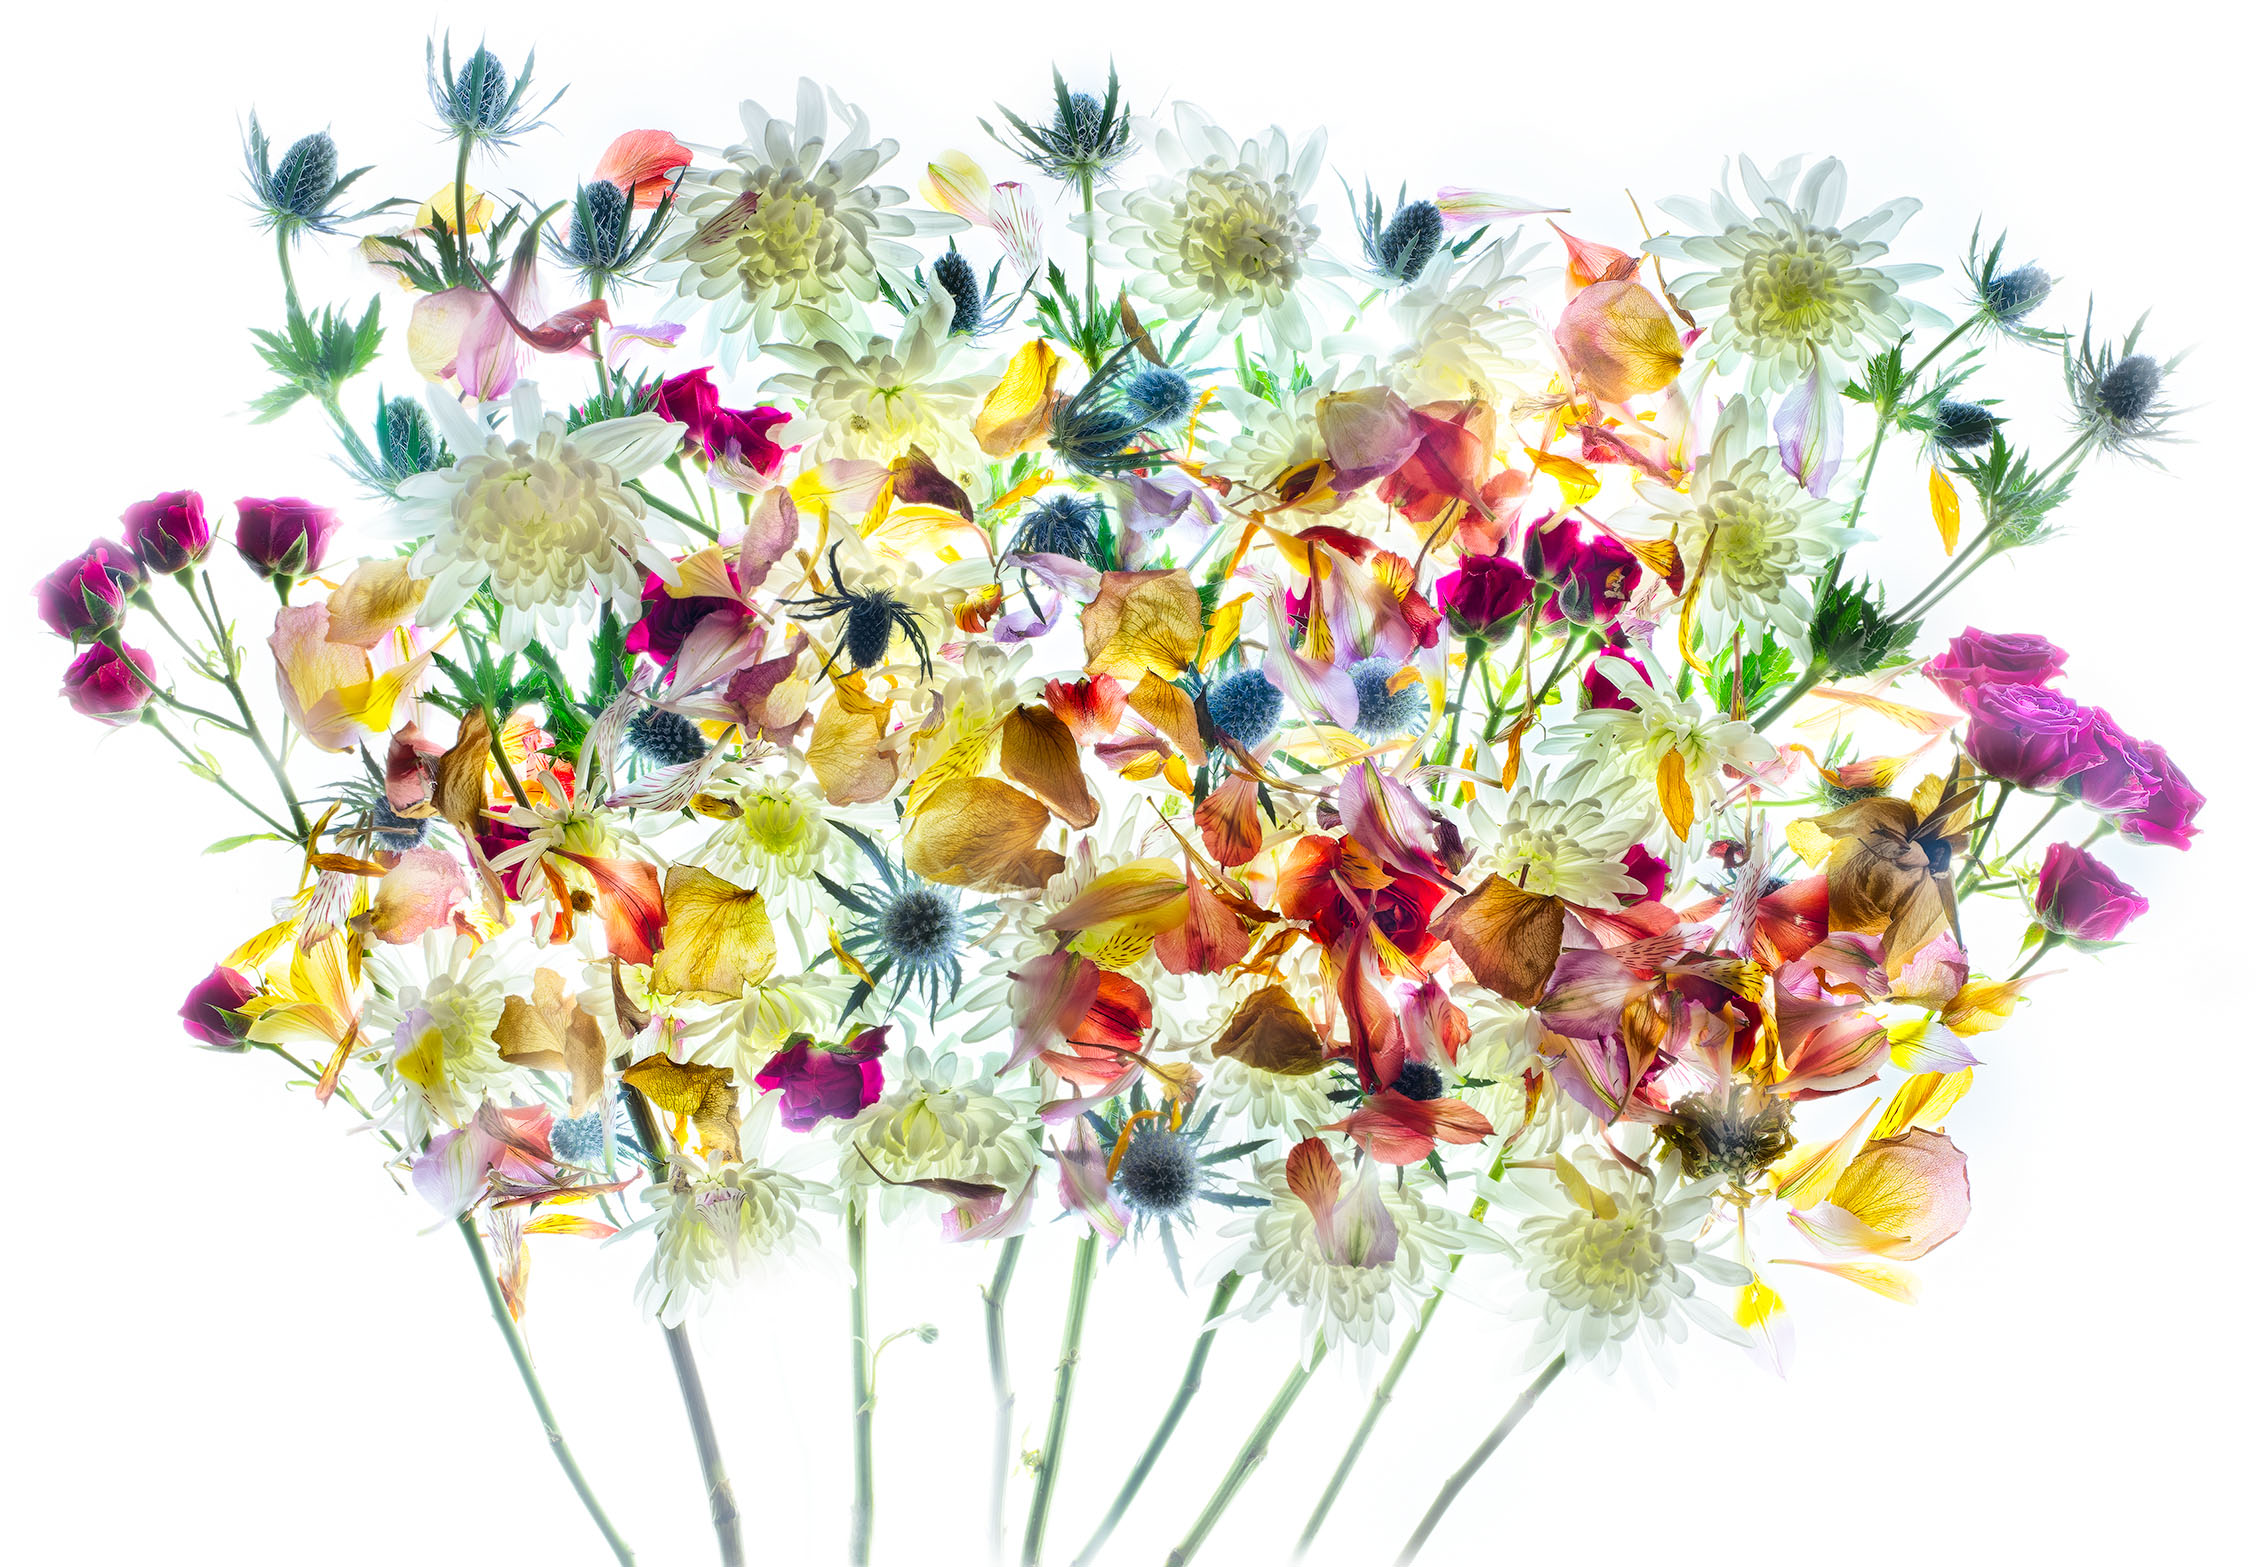 Flowers are Multitudes © Harold Davis